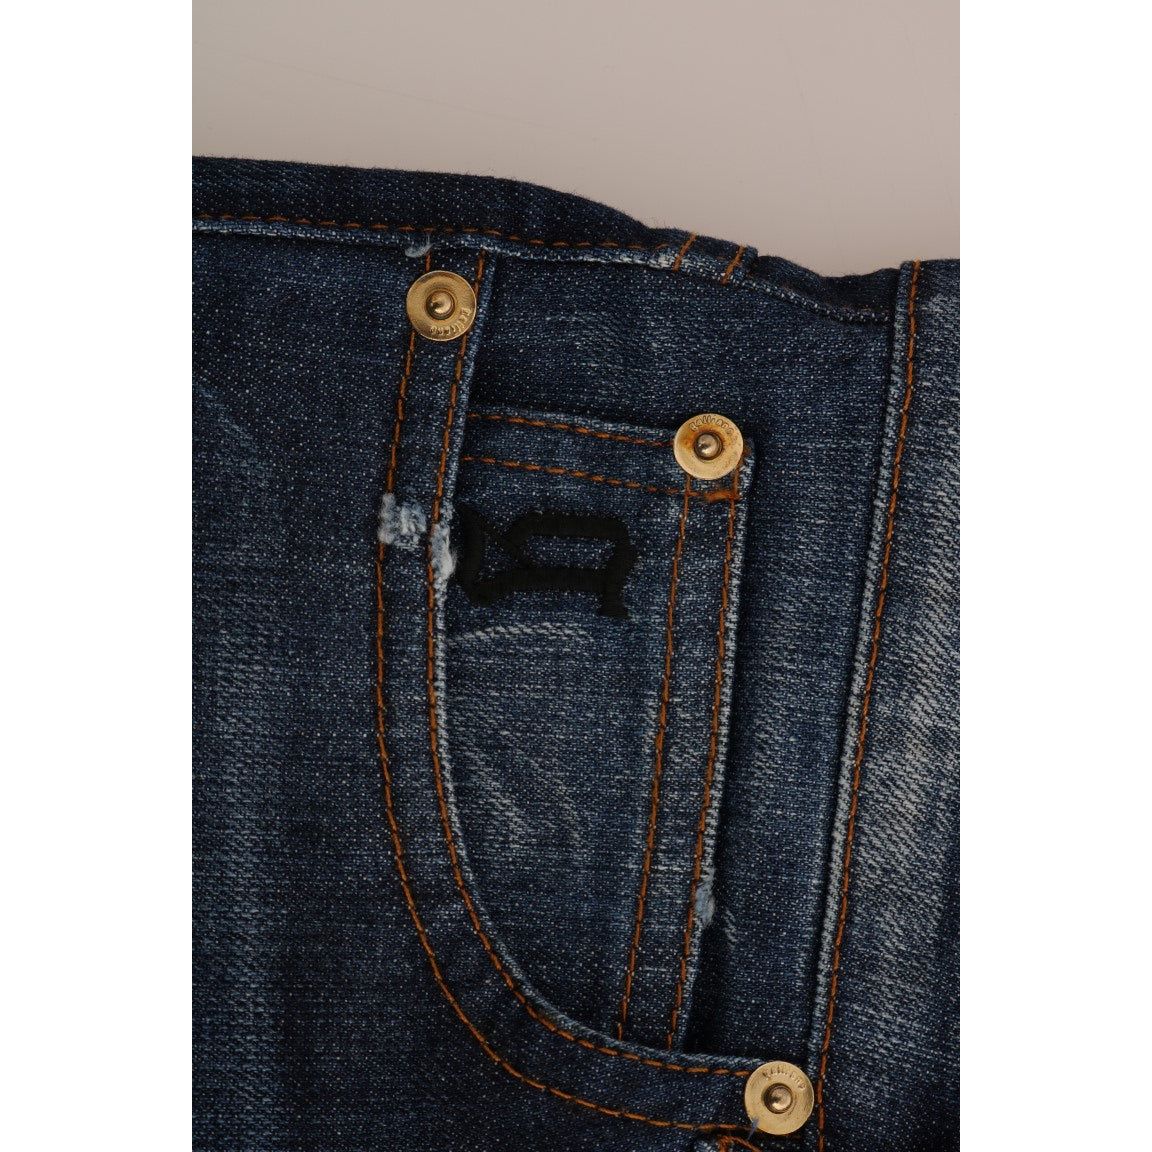 John Galliano Stylish Skinny Low Rise Denim Jeans blue-wash-cotton-stretch-skinny-low-jeans 490796-blue-wash-cotton-stretch-skinny-low-jeans-5.jpg